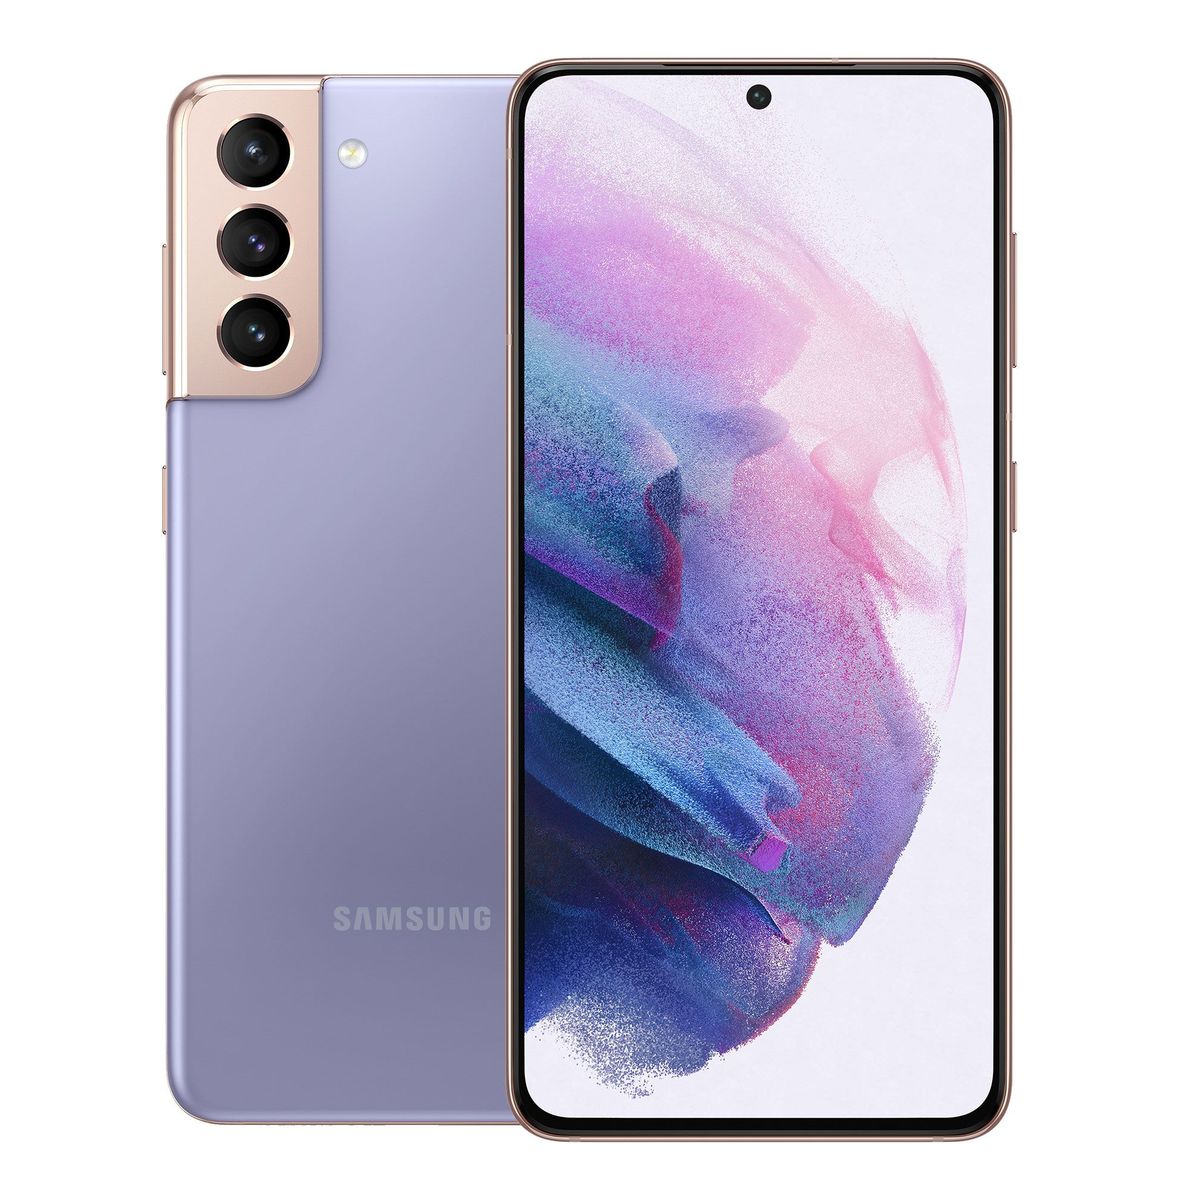 Samsung Galaxy S21 Smartphone 5G 128GB/8GB Phantom Violet